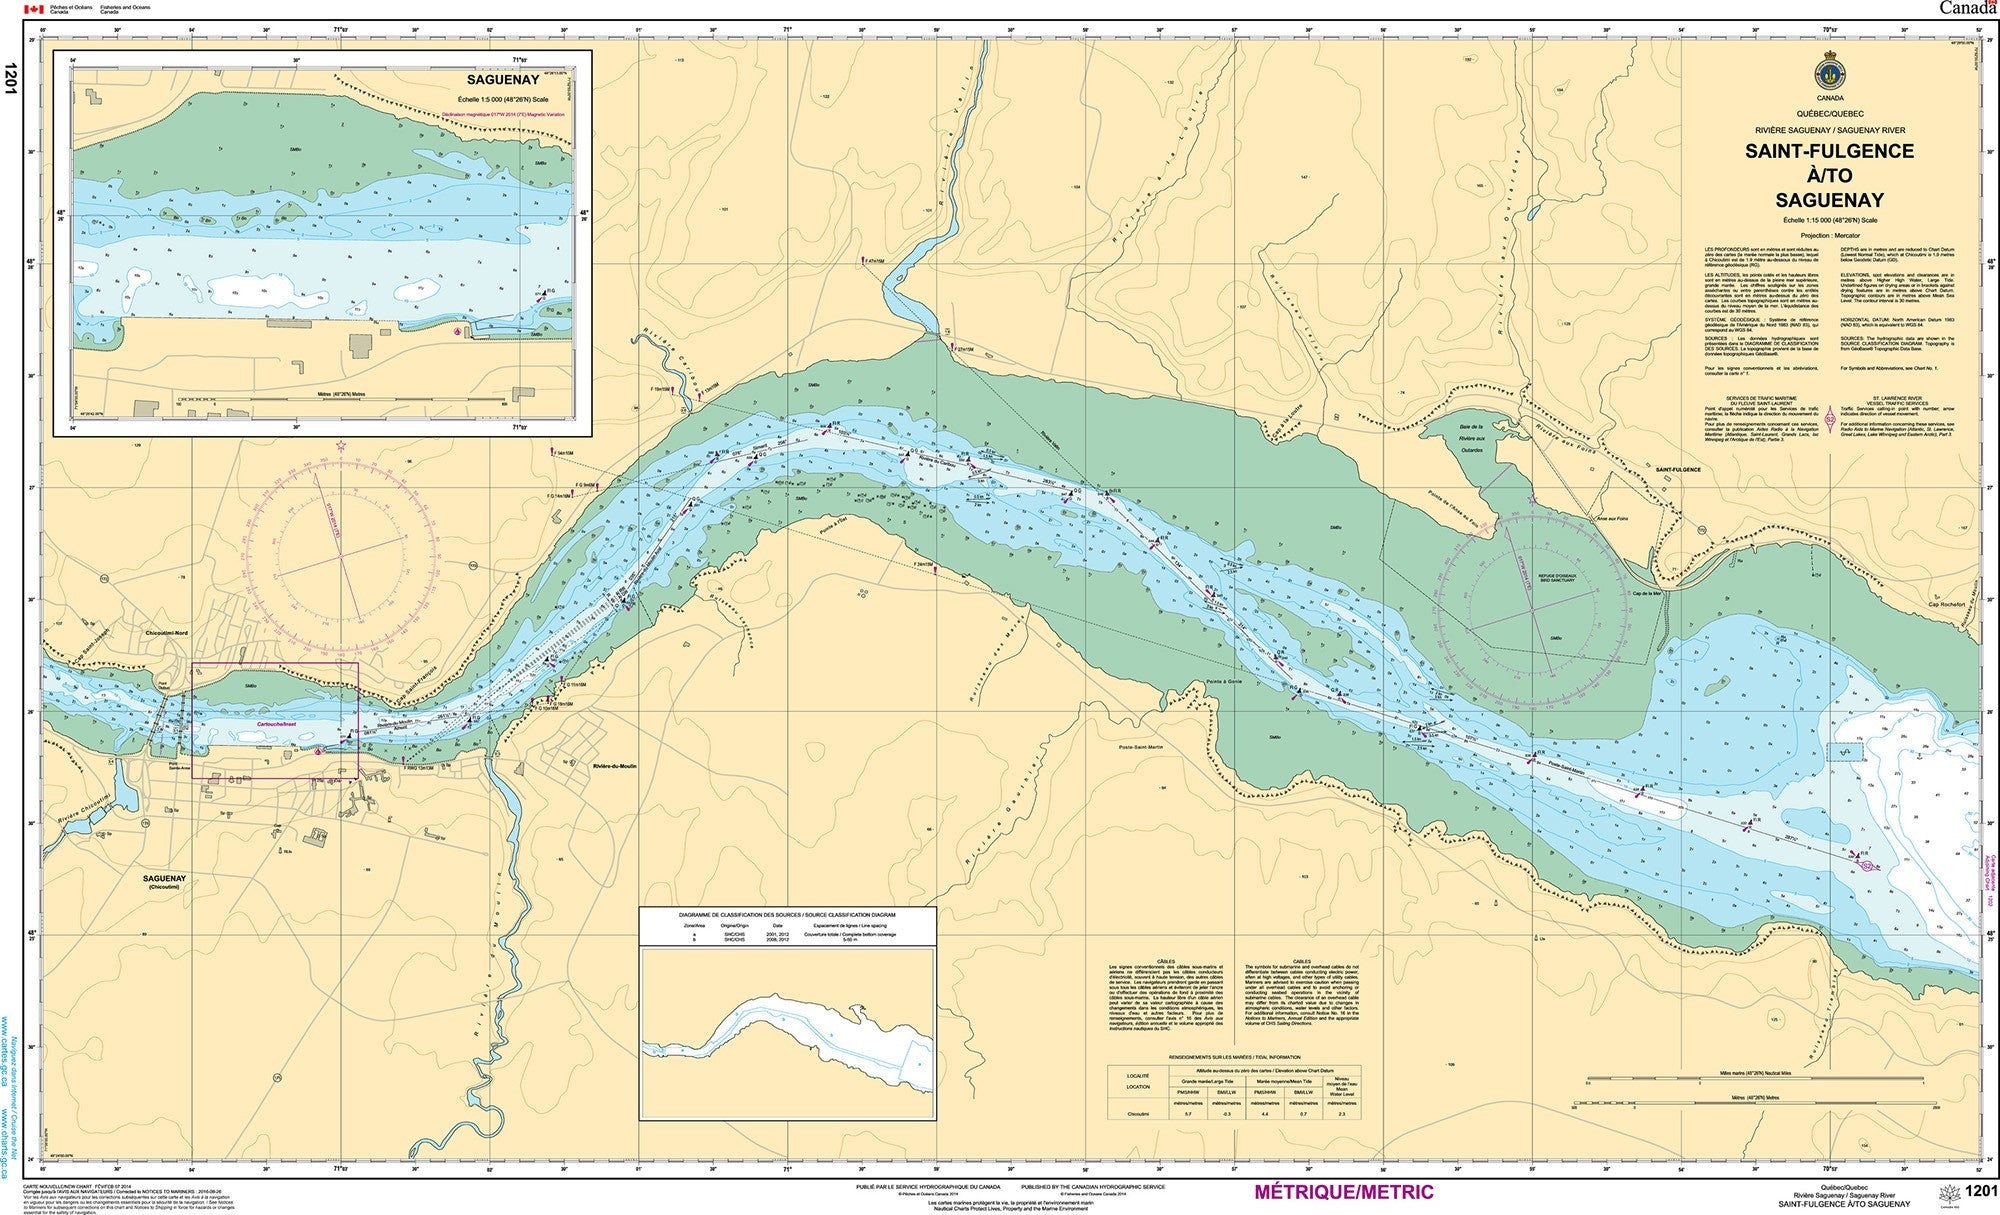 Canadian Hydrographic Service Nautical Chart CHS1201: Saint-Fulgence à/to Saguenay